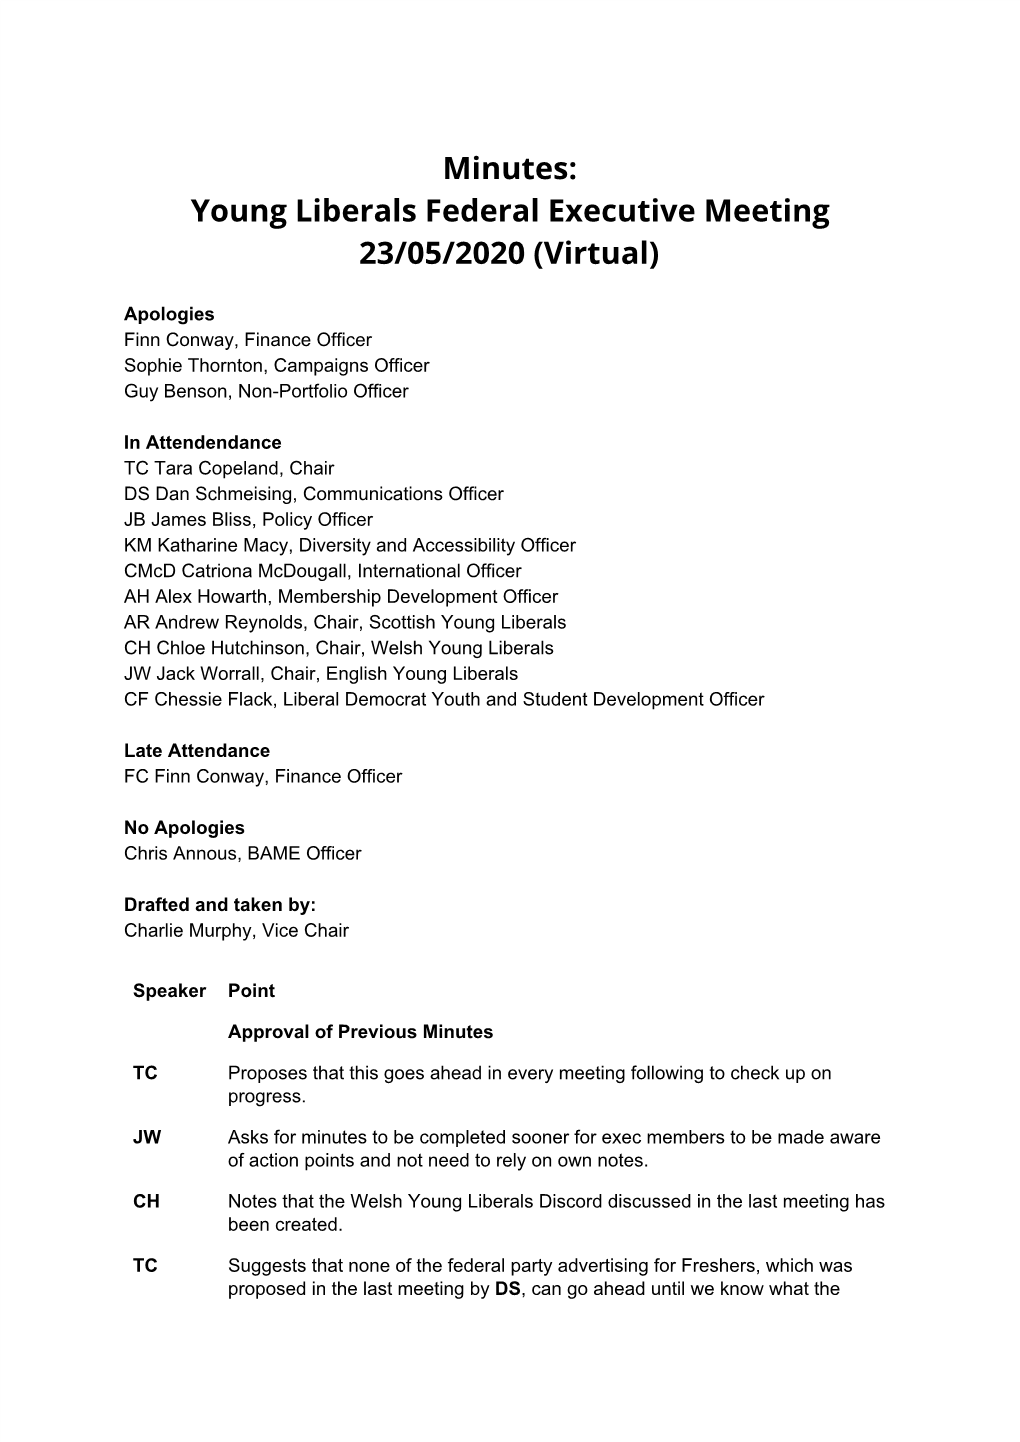 Minutes: Young Liberals Federal Executive Meeting 23/05/2020 (Virtual)